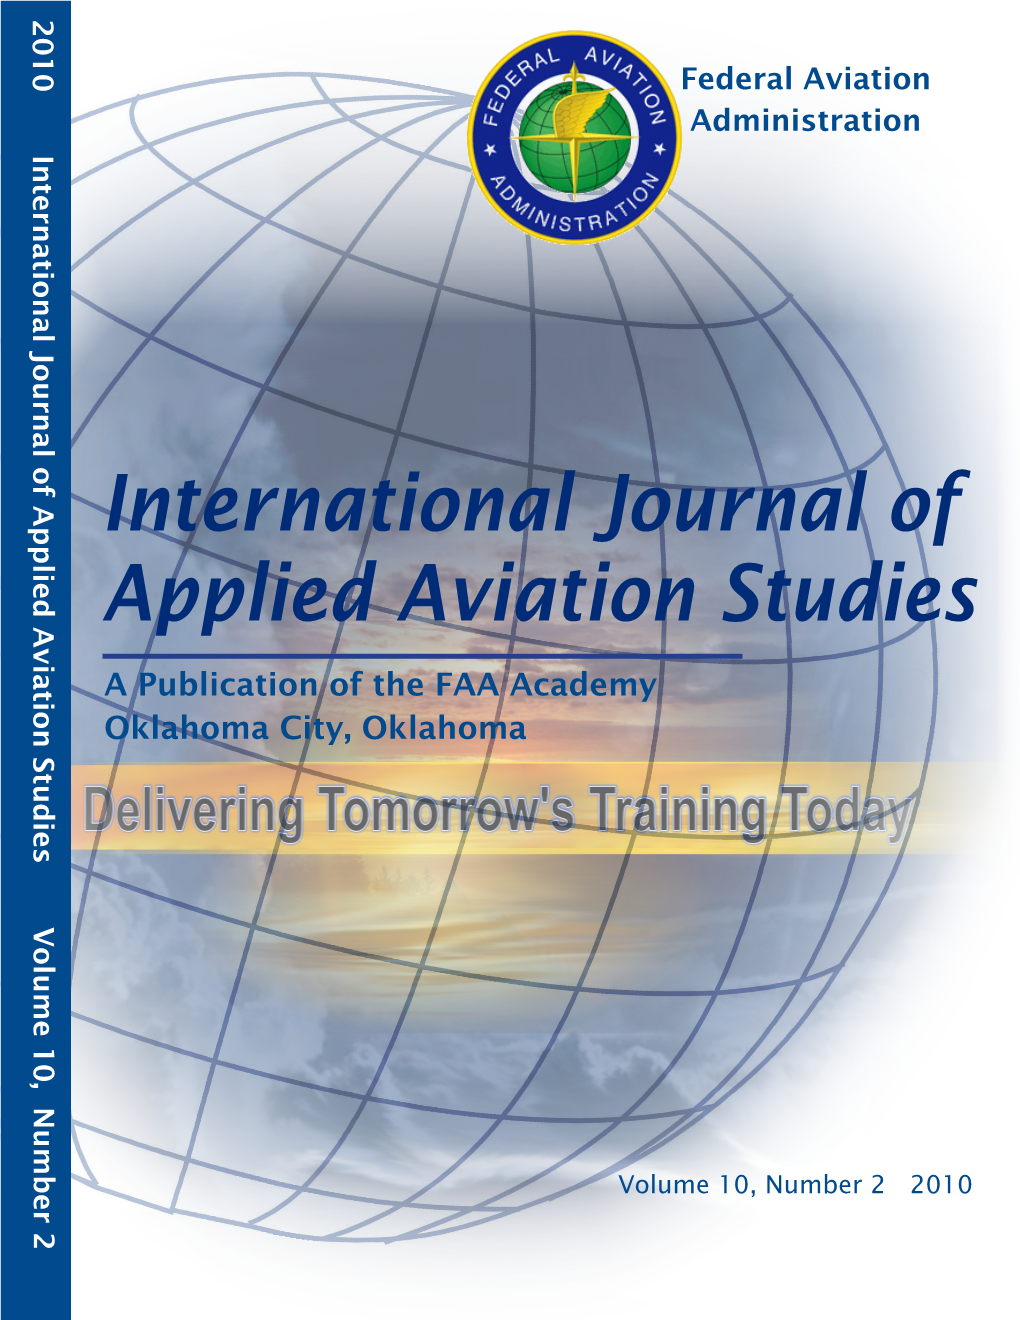 International Journal of Applied Aviation Studies Volume 10, Number 2